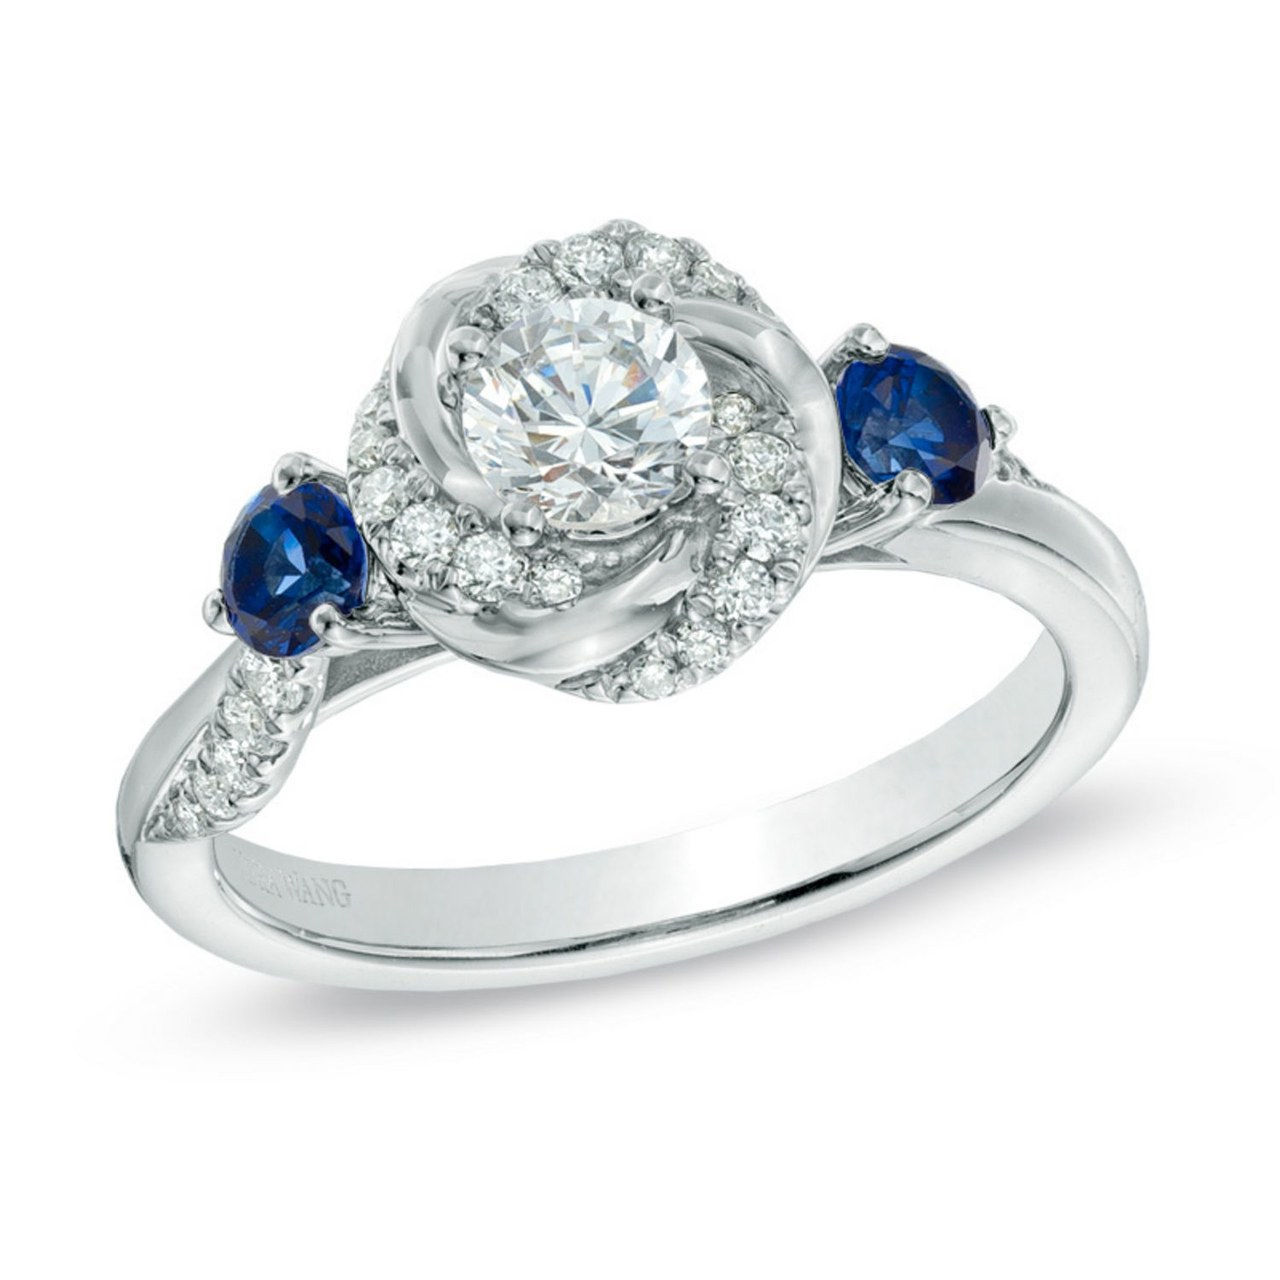 2b sapphire engagement rings 1026 courtesy vera wang love